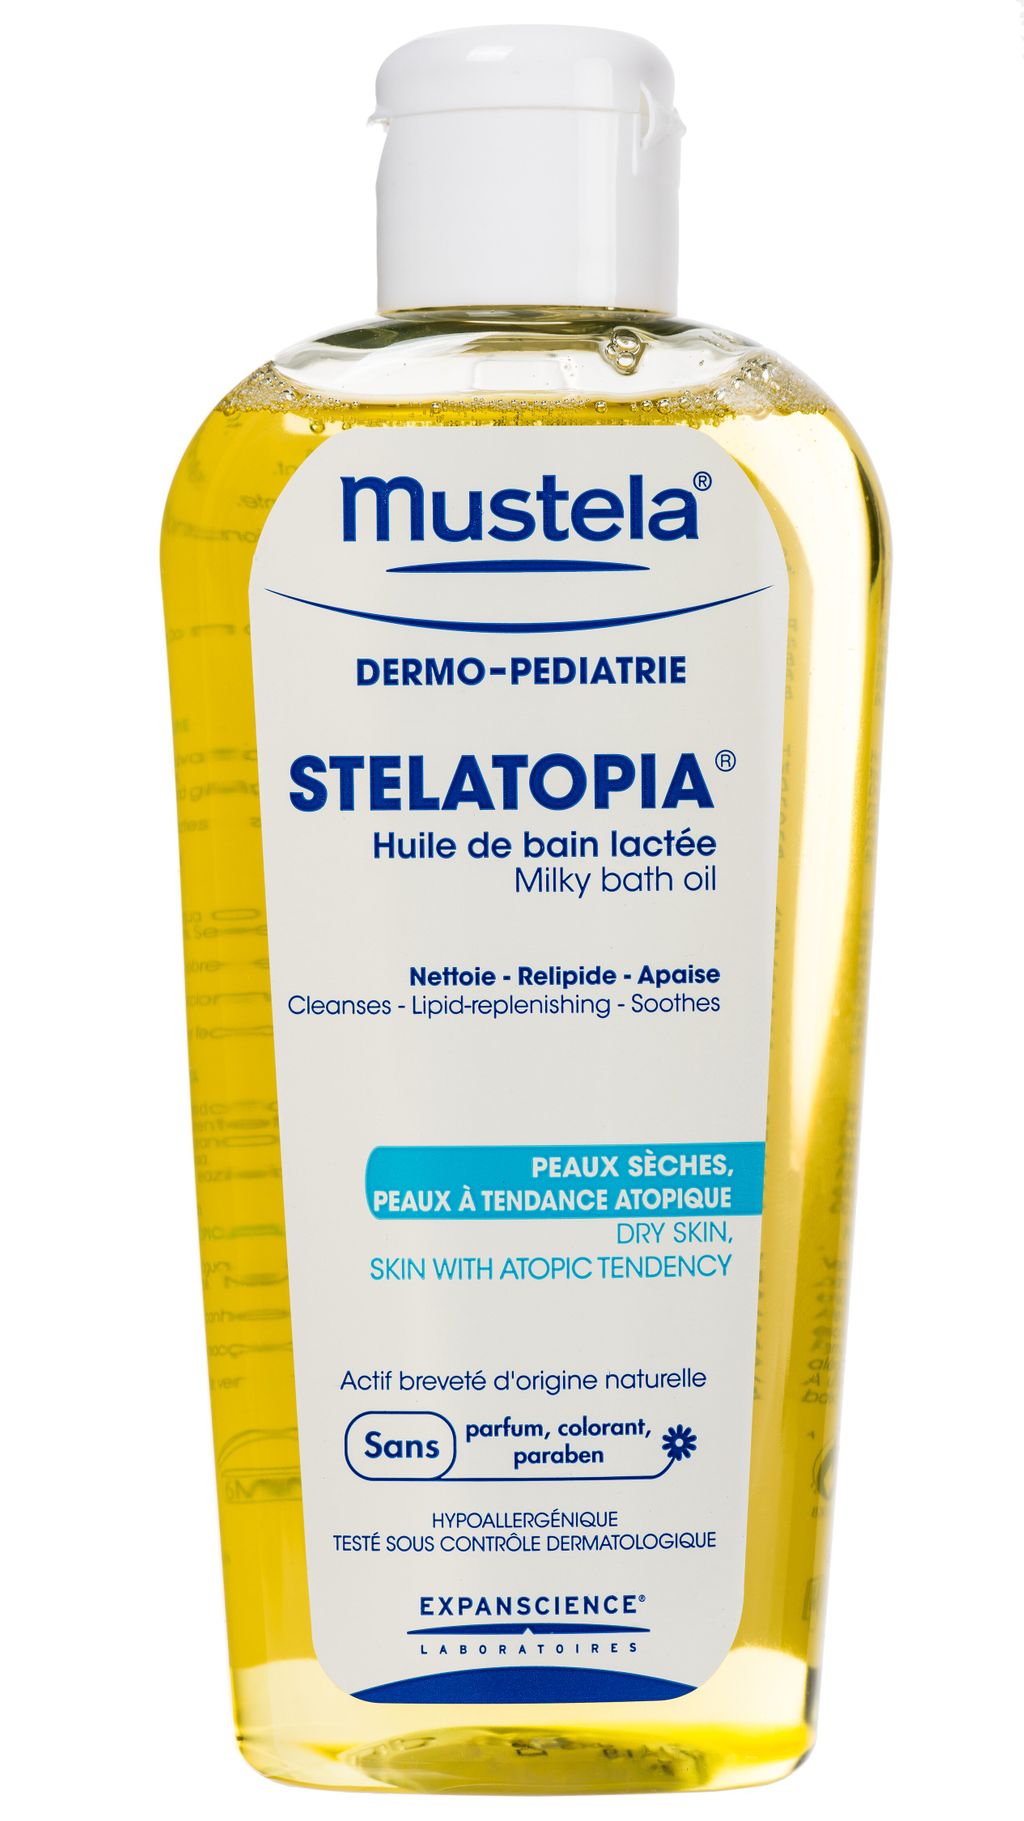 Mustela Stelatopia масло для ванны, масло для детей, 200 мл, 1 шт.